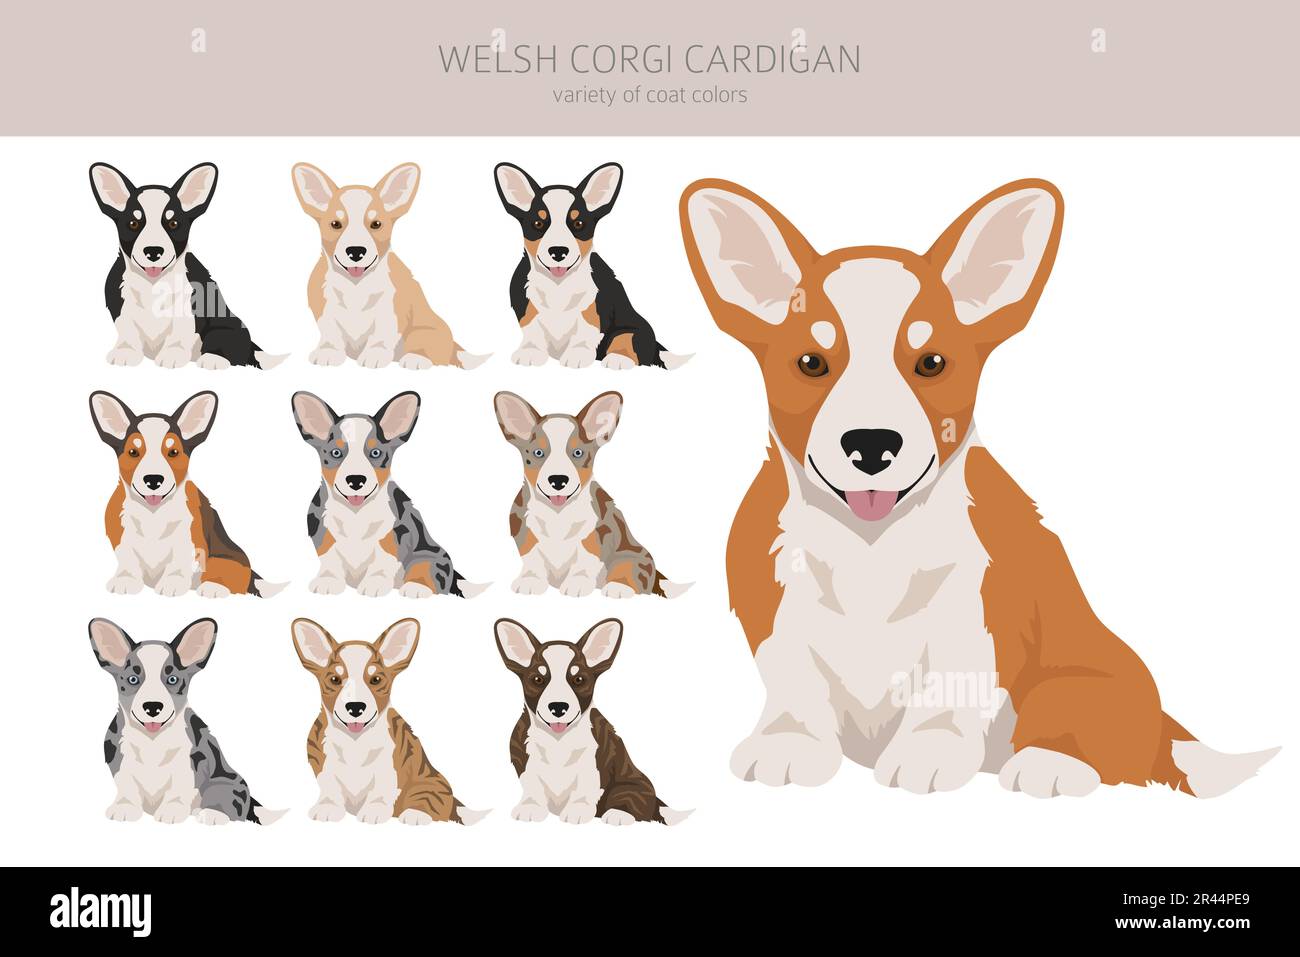 Welsh corgi cardigan puppy clipart. Different poses, coat colors set.  Vector illustration Stock Vector